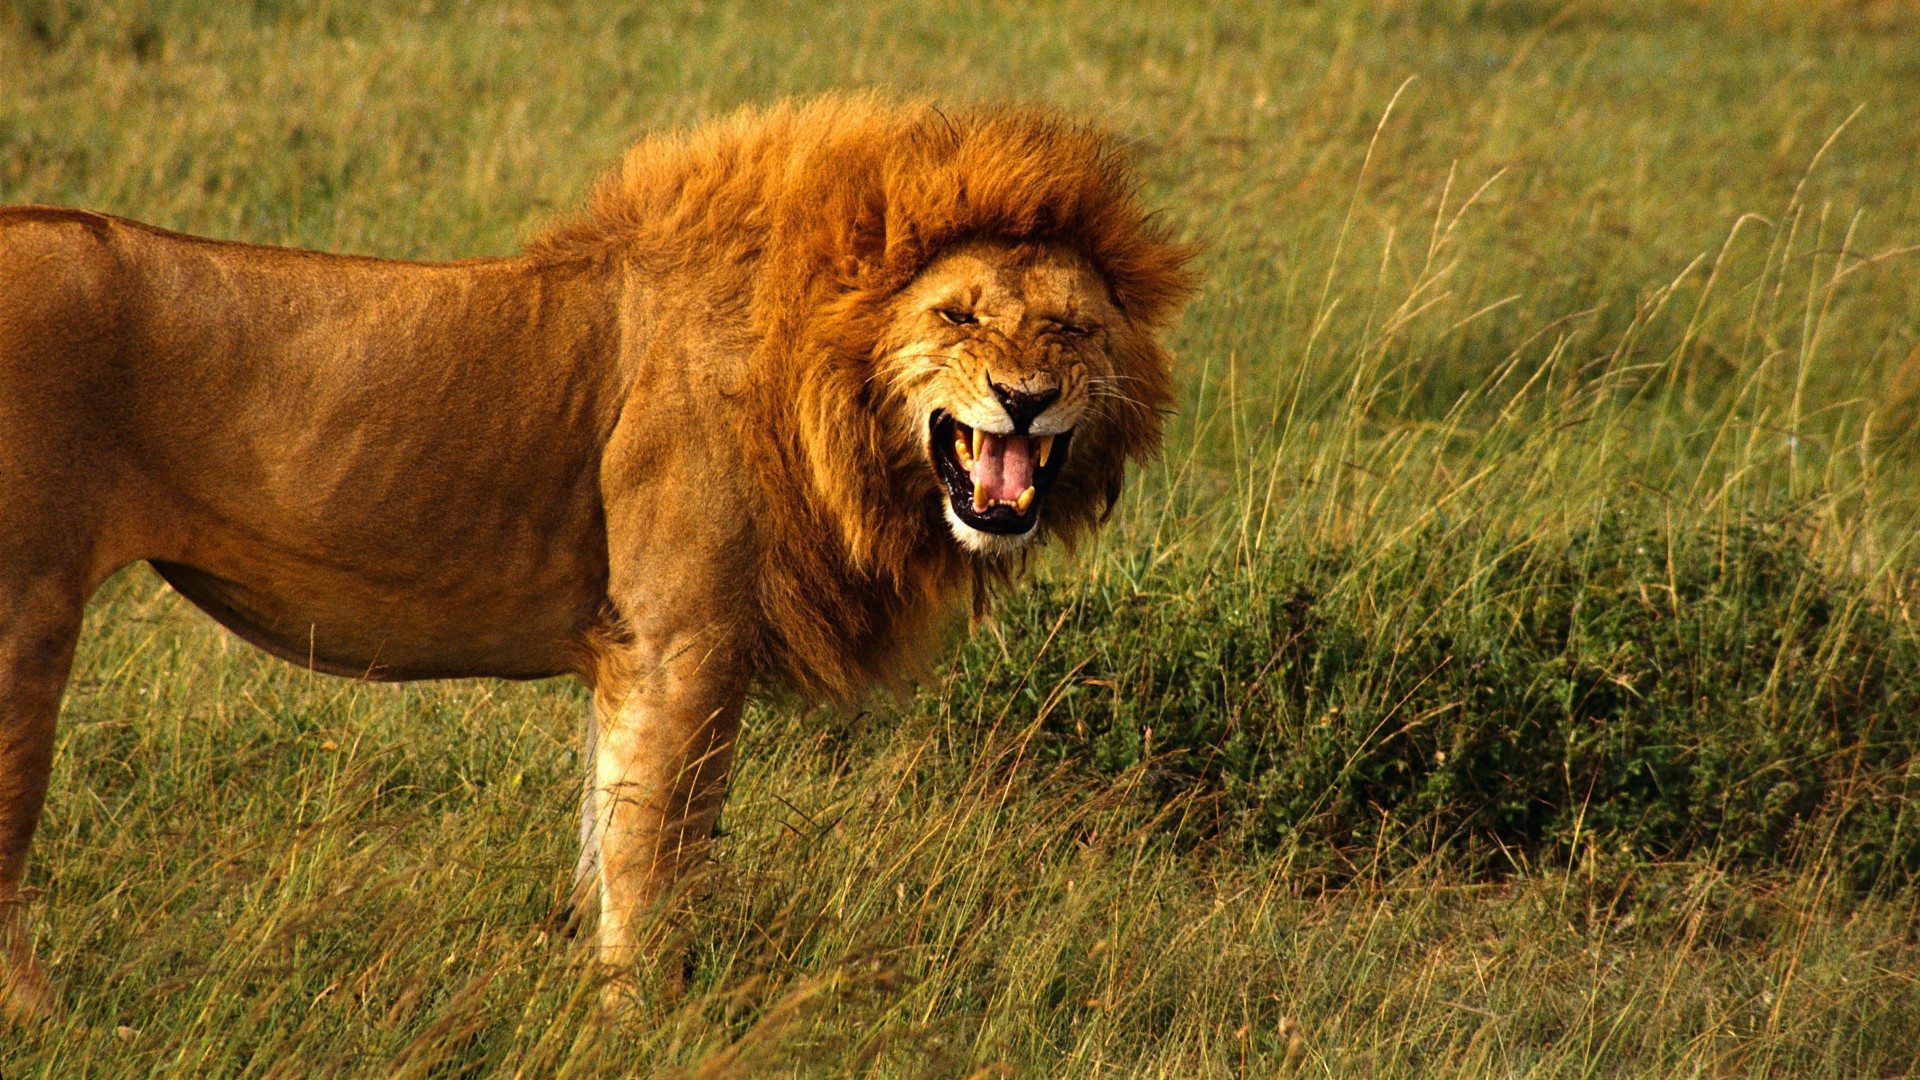 The Lion Roars - Wikipedia